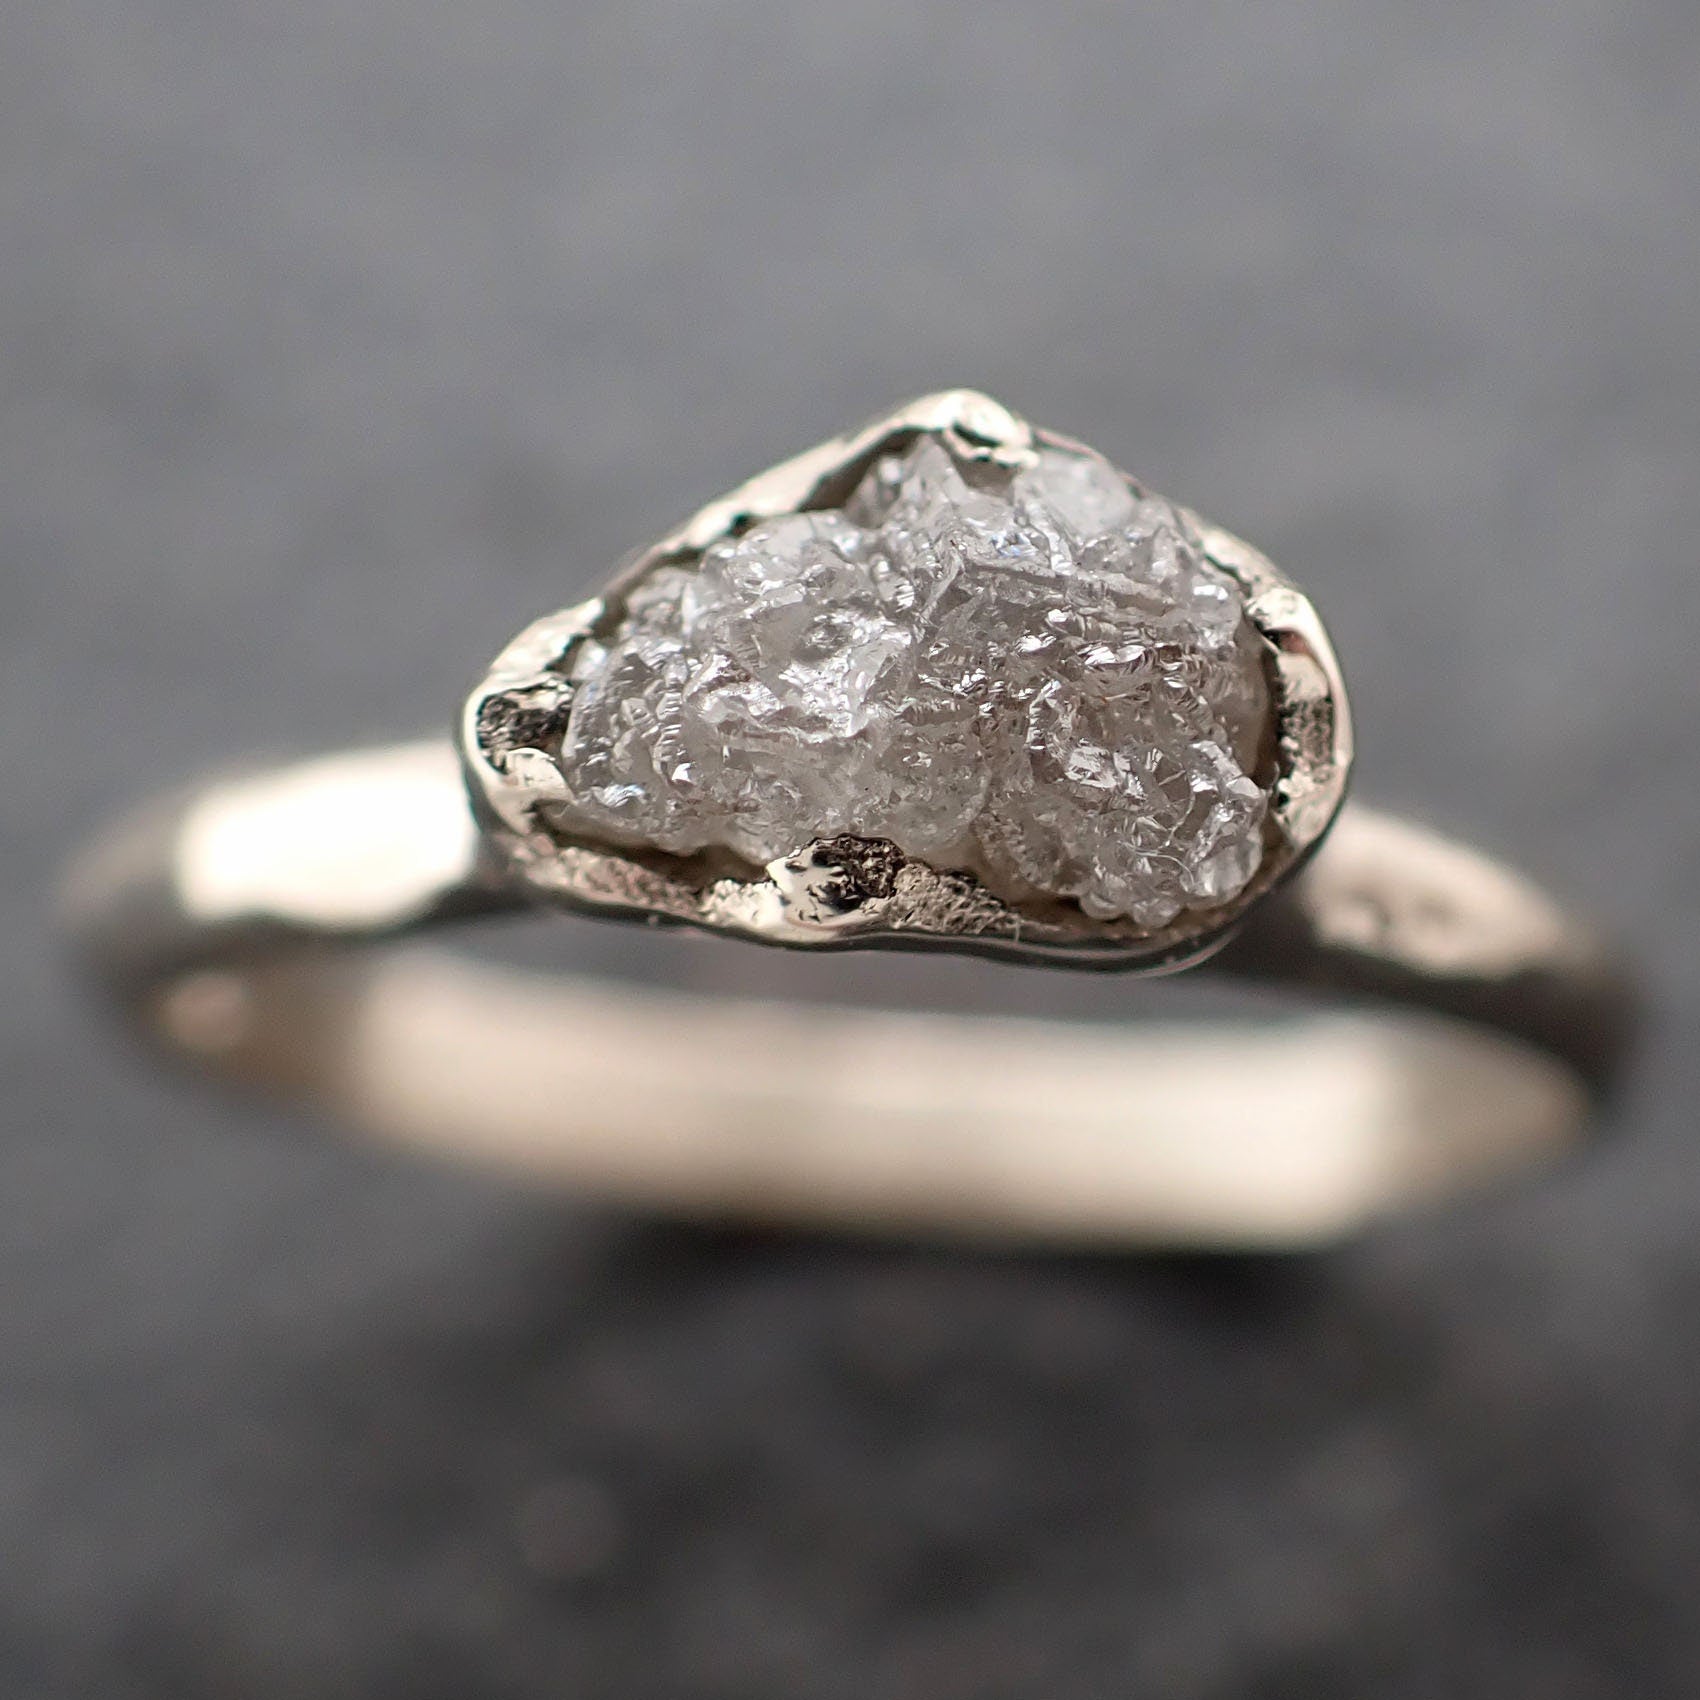 Raw White Diamond Solitaire Engagement Ring 14k White Gold Stacking Rough Diamond byAngeline 3144